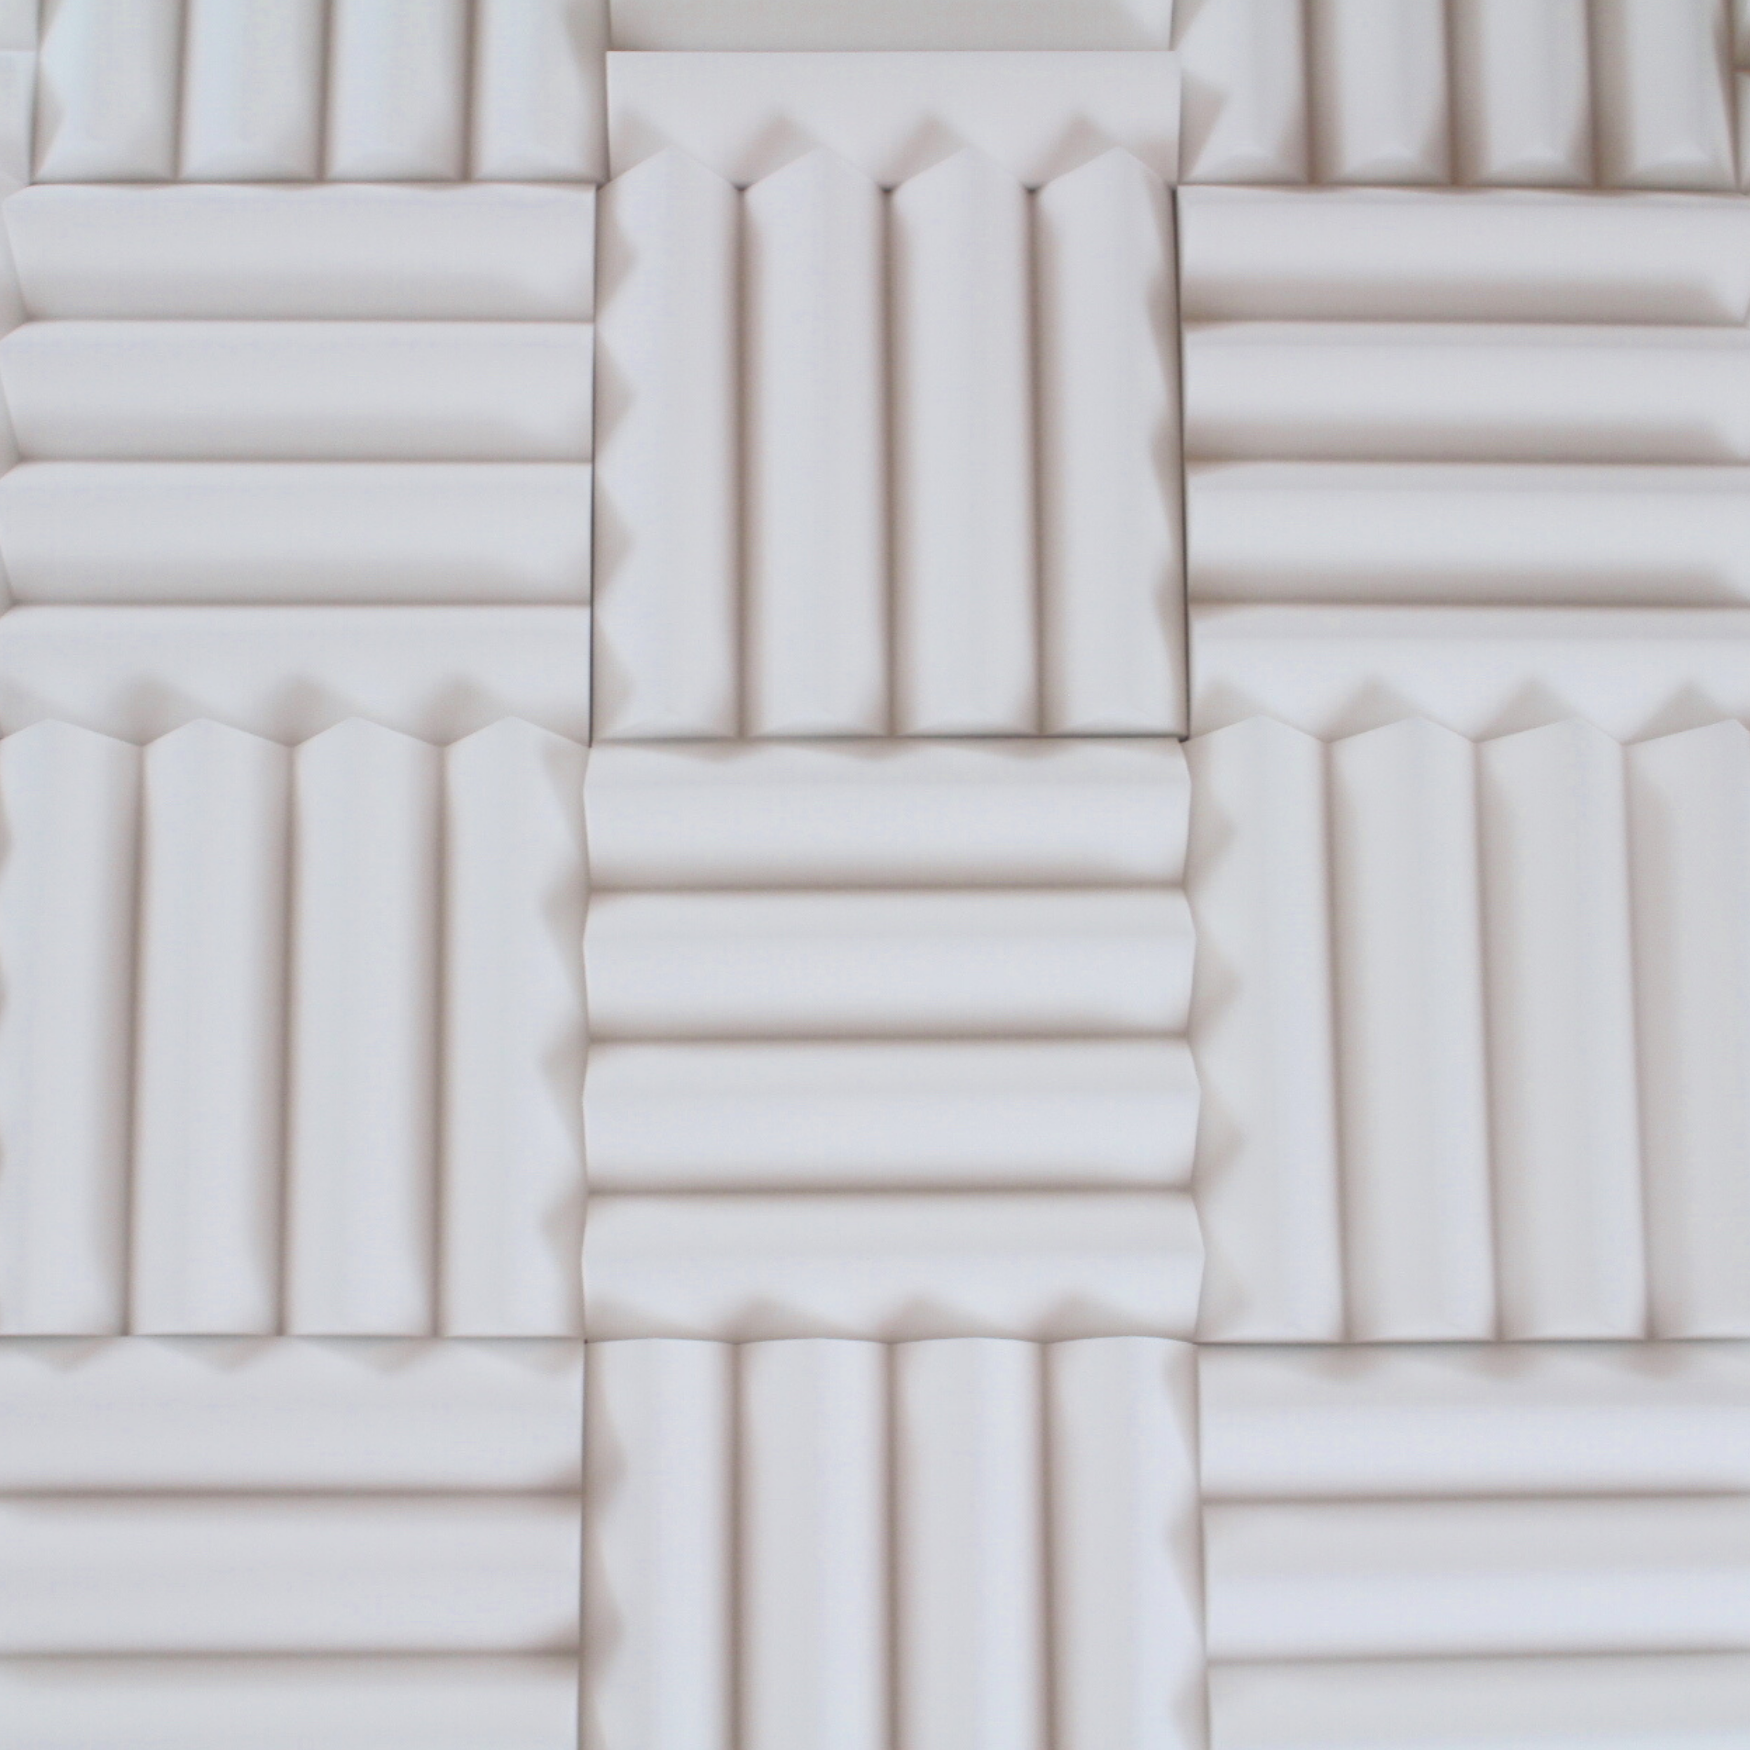 SoundAssured White Acoustic Foam 3x12x12 inch Panels - 2 Pack